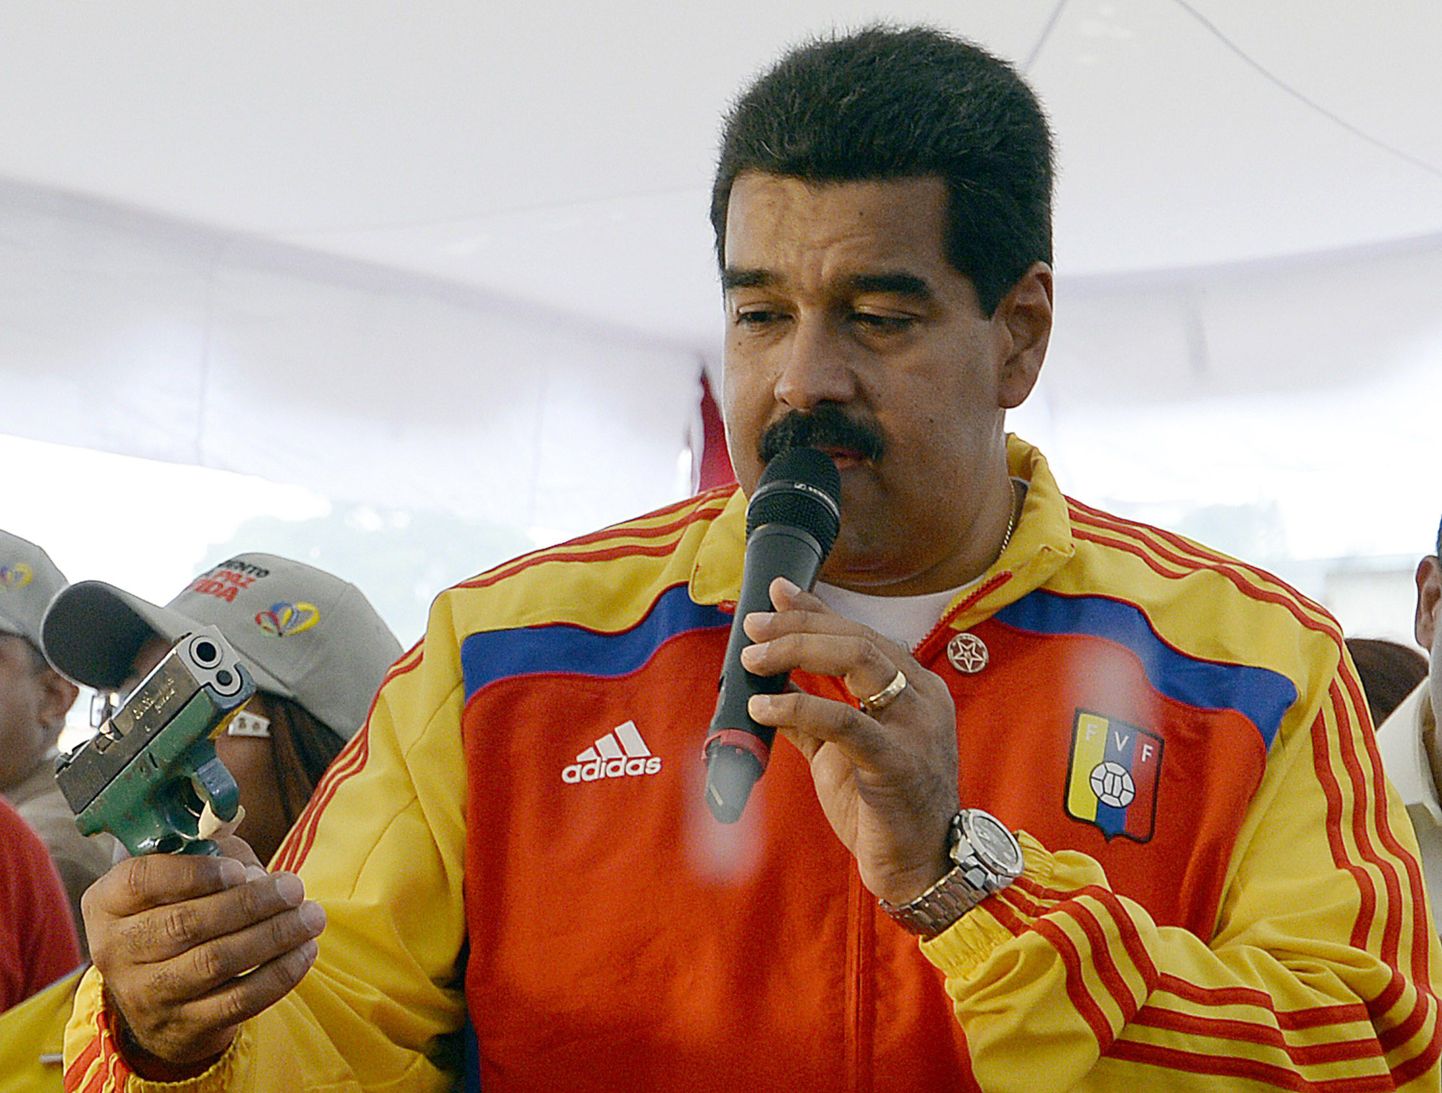 Venezuela president Nicolas Maduro